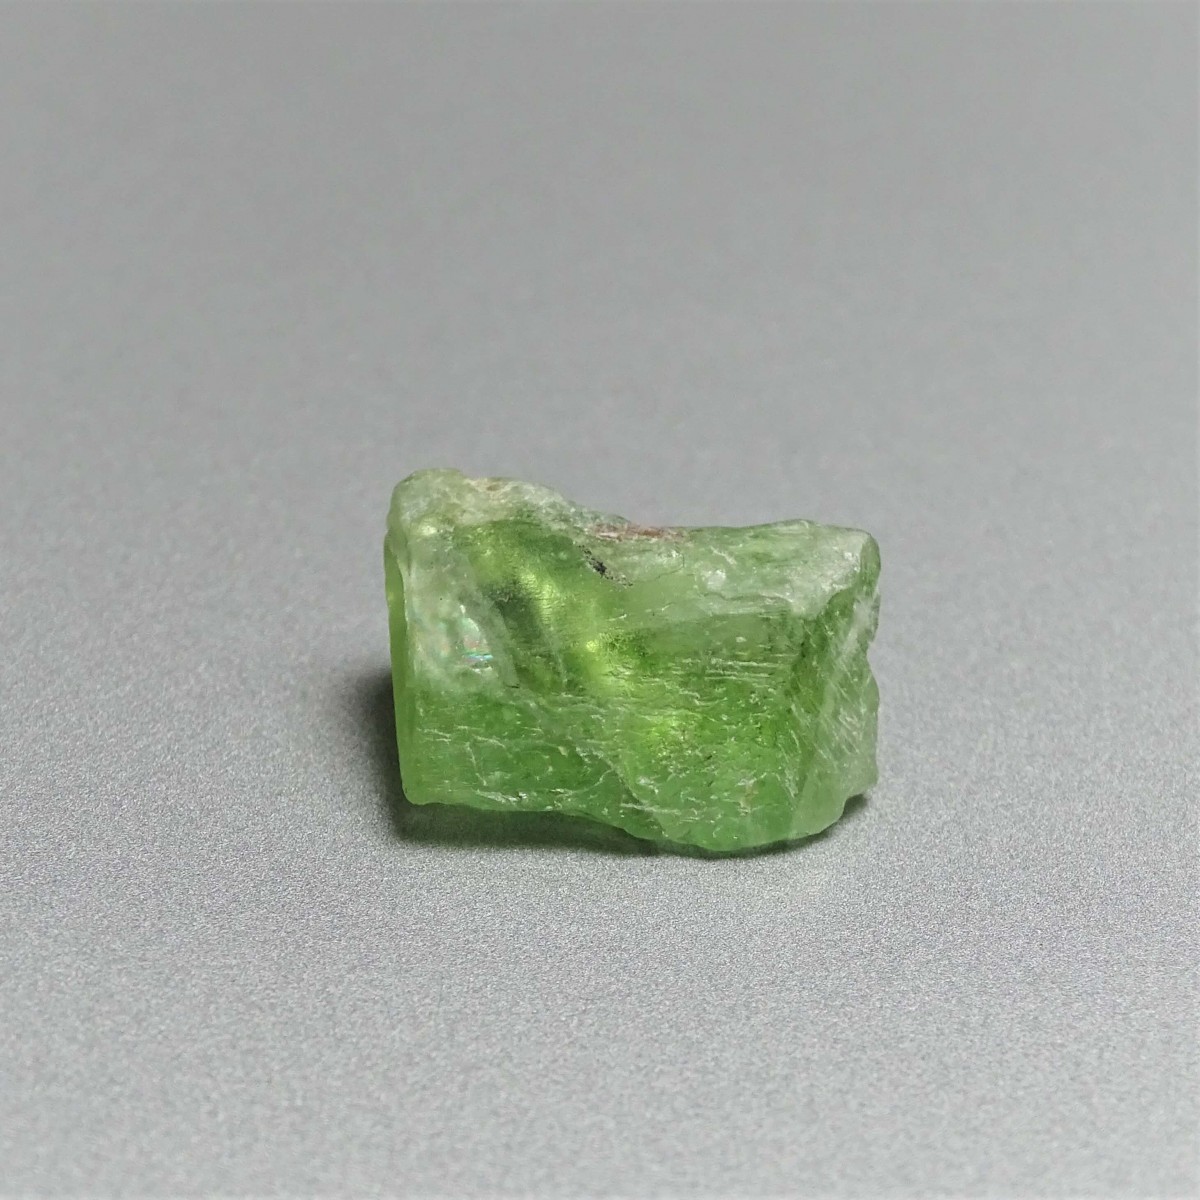 Peridot / Olivine crude mineral 4.4g, Pakistan